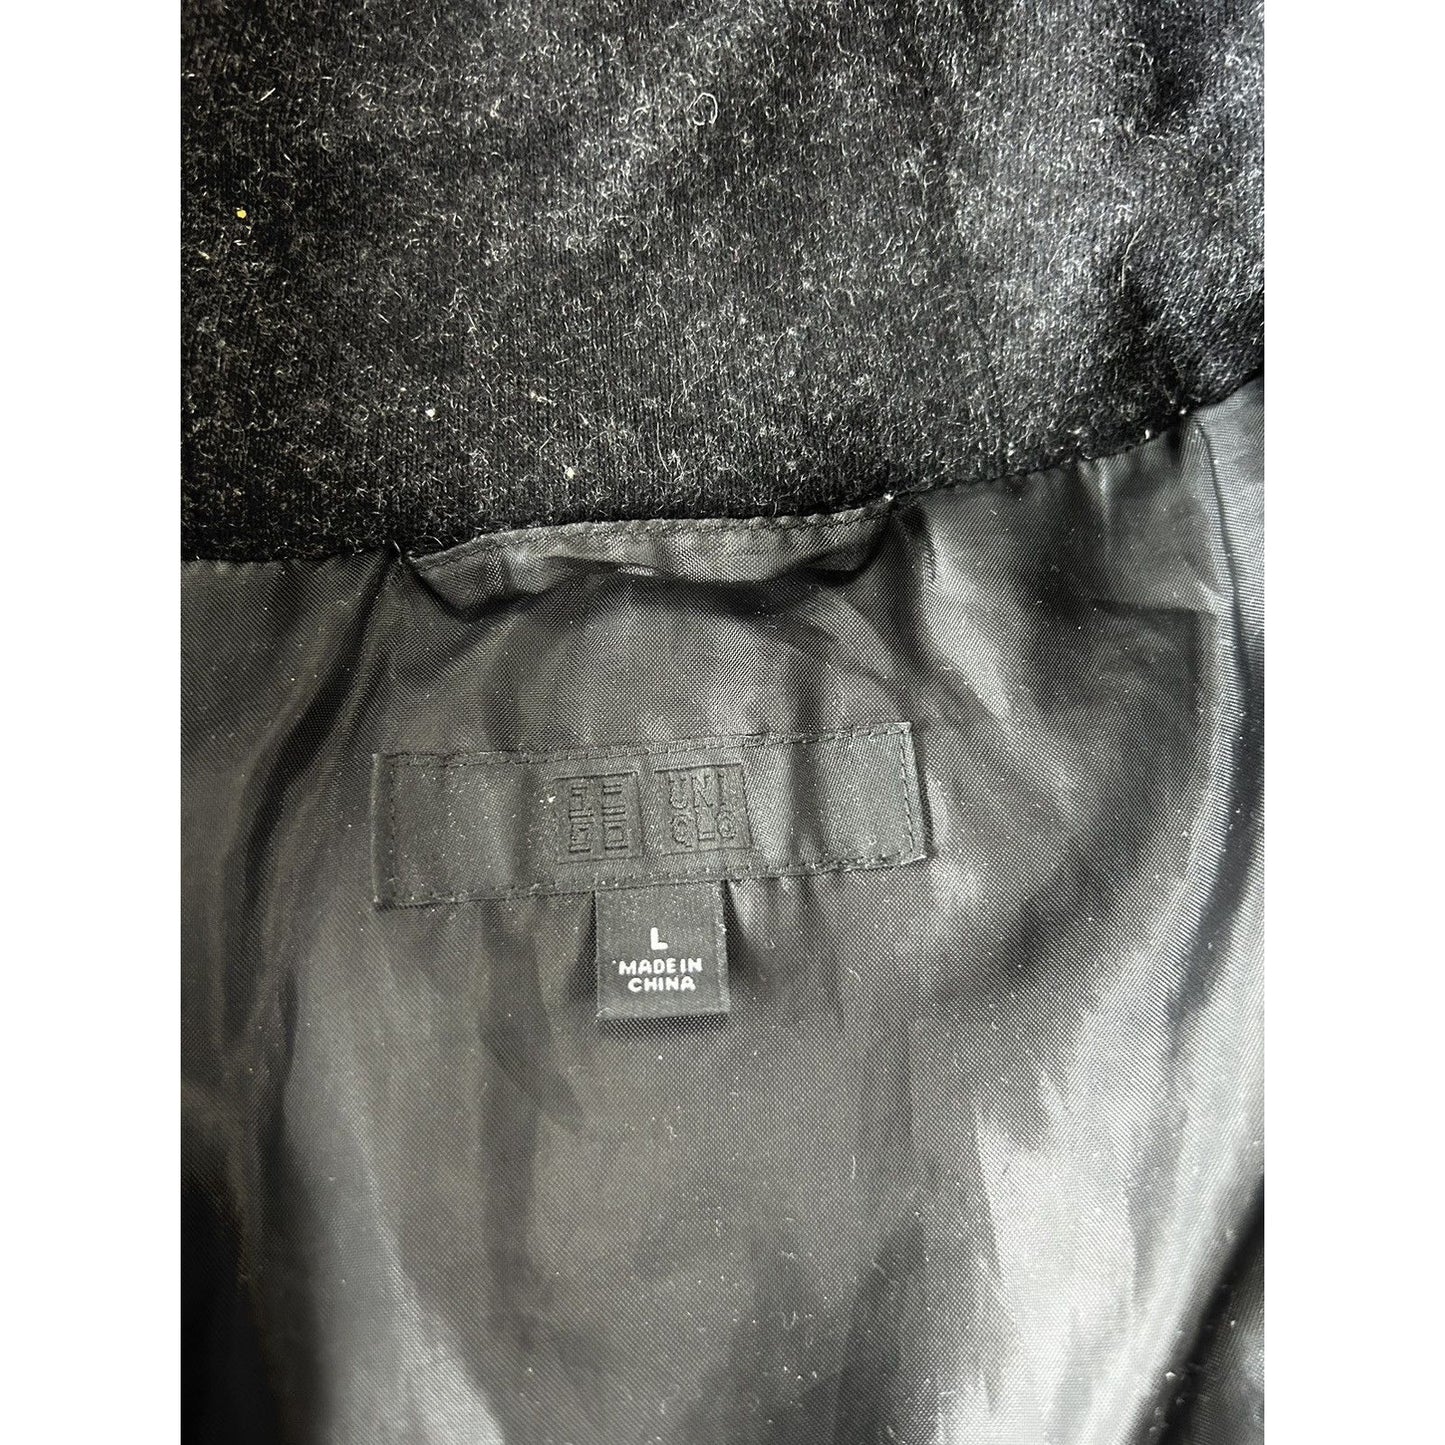 Uniqlo Puffer Jacket Hooded dark grey down